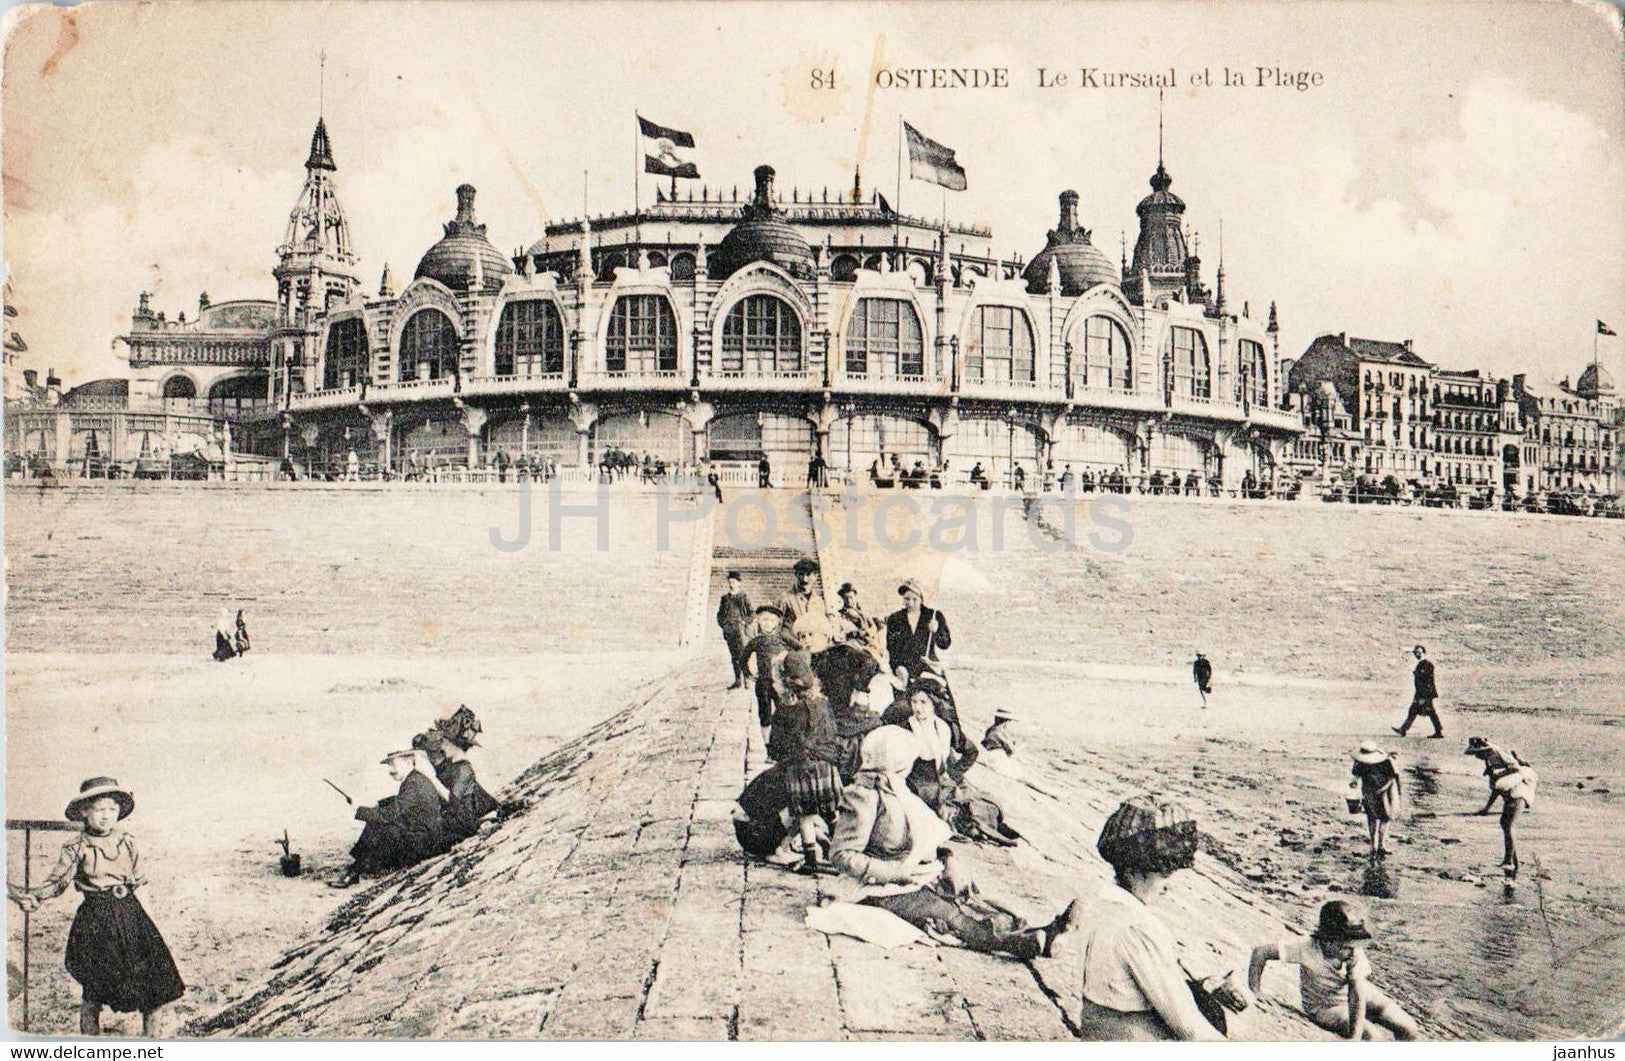 Ostende - Oostende - Le Kursaal et la Plage - beach - 84 - old postcard - 1919 - Belgium - used - JH Postcards